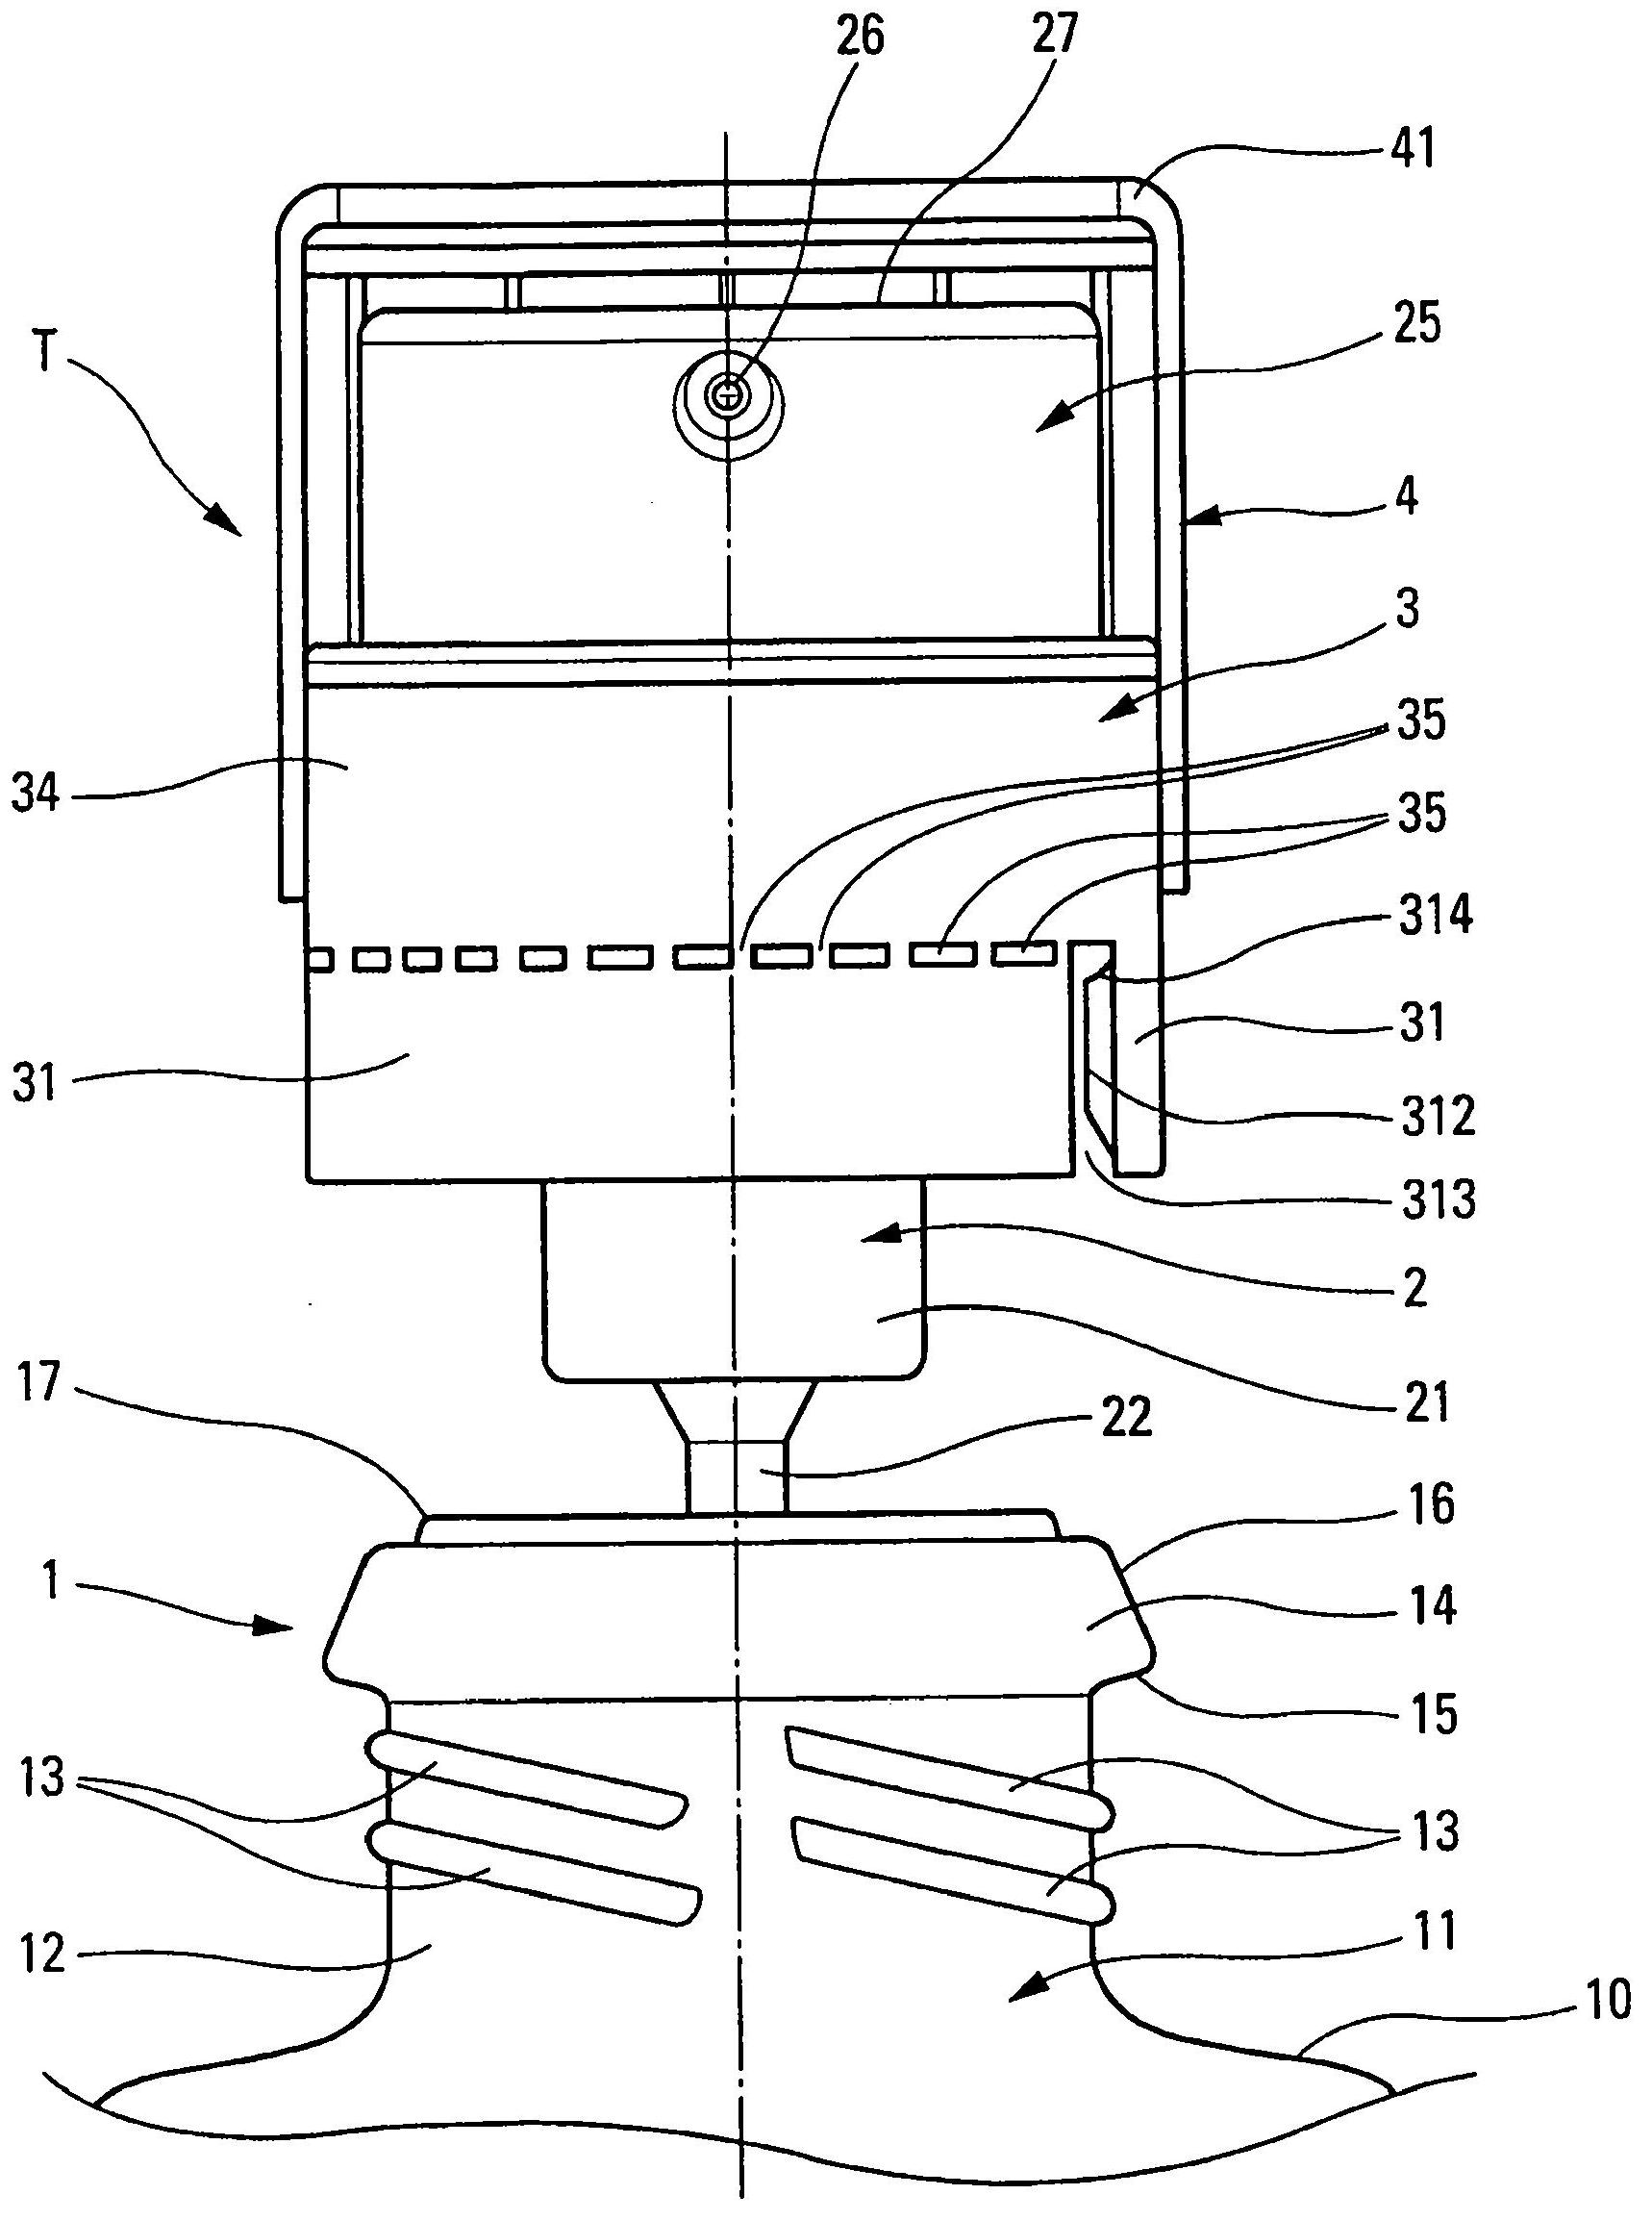 Dispenser of fluid material